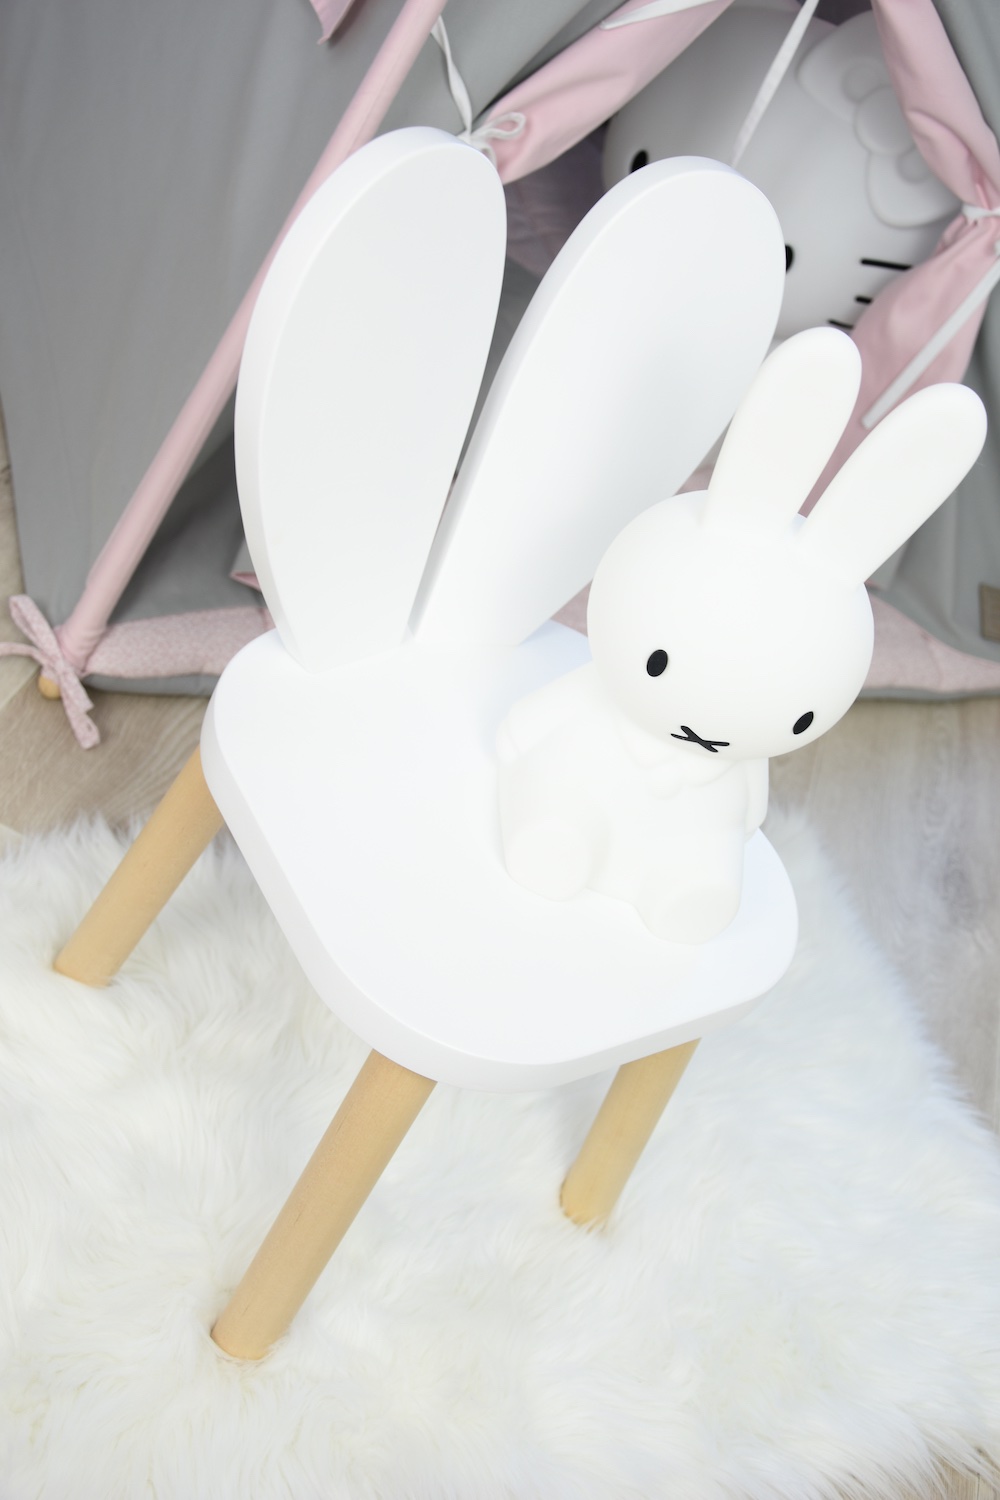 krzesło krzesełko drewniane królik króliczek serce rabbit heart